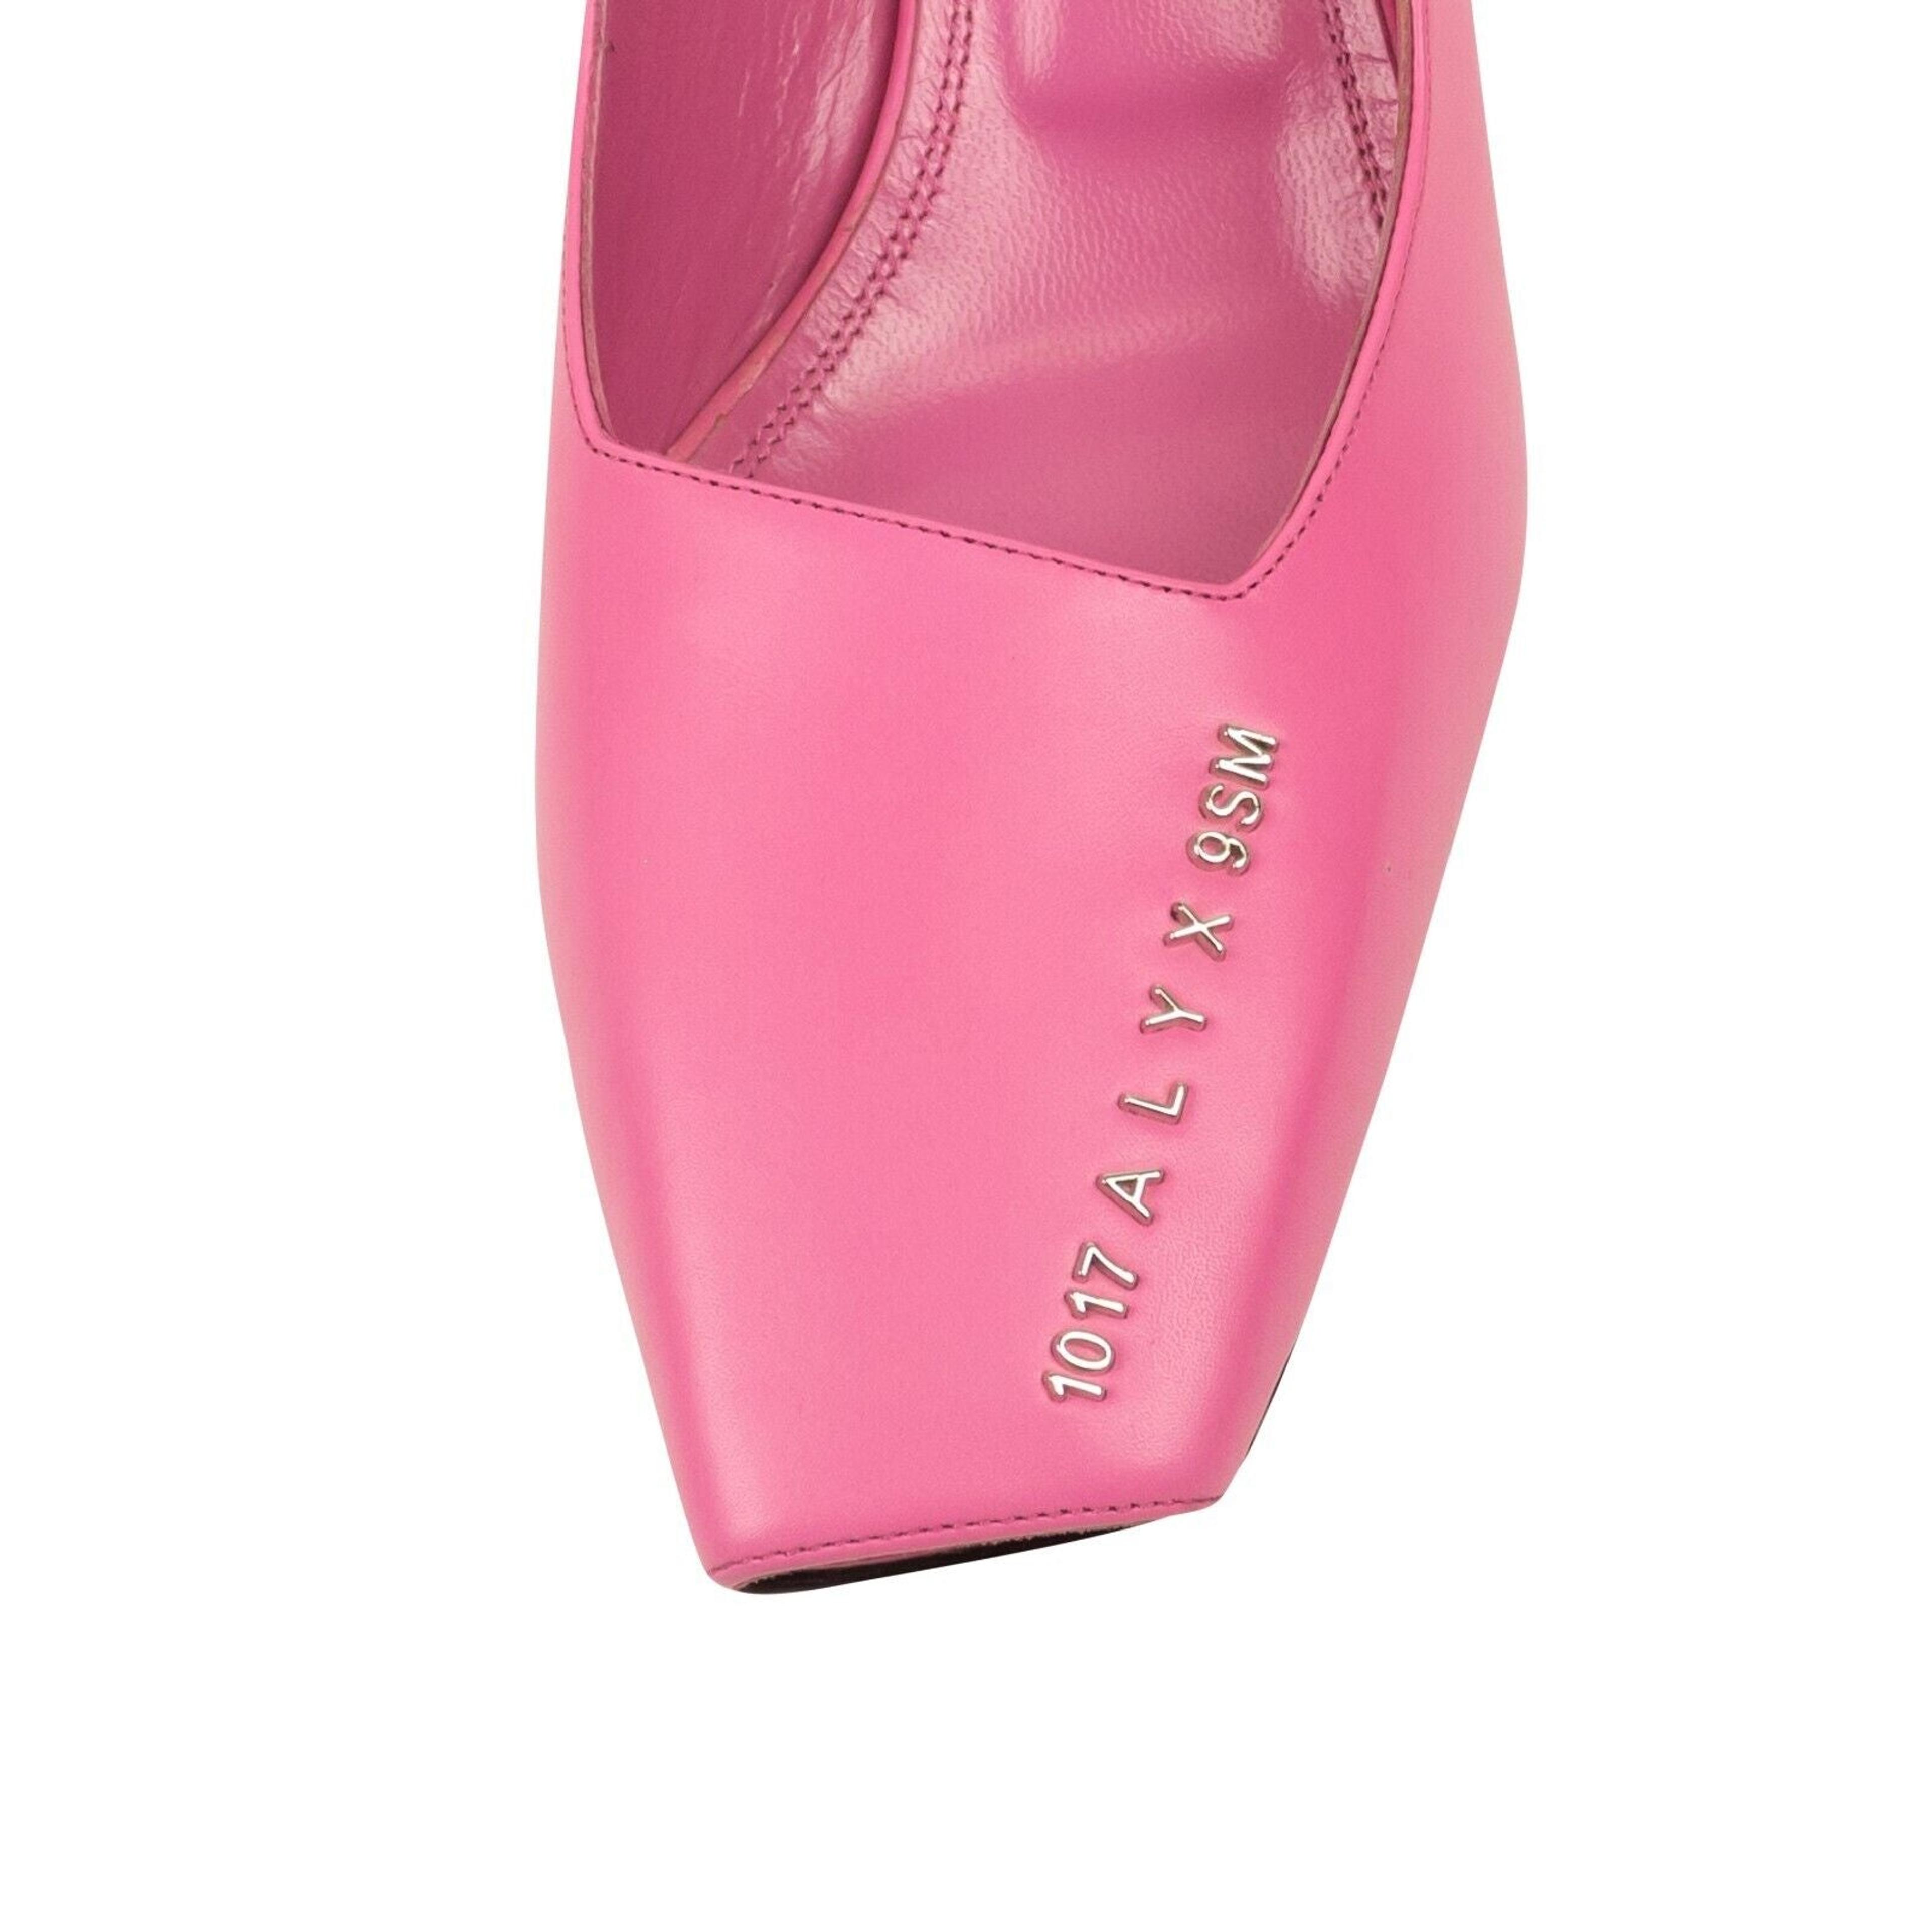 Alternate View 4 of Pink BETTA Leather Slingback Pump Heels